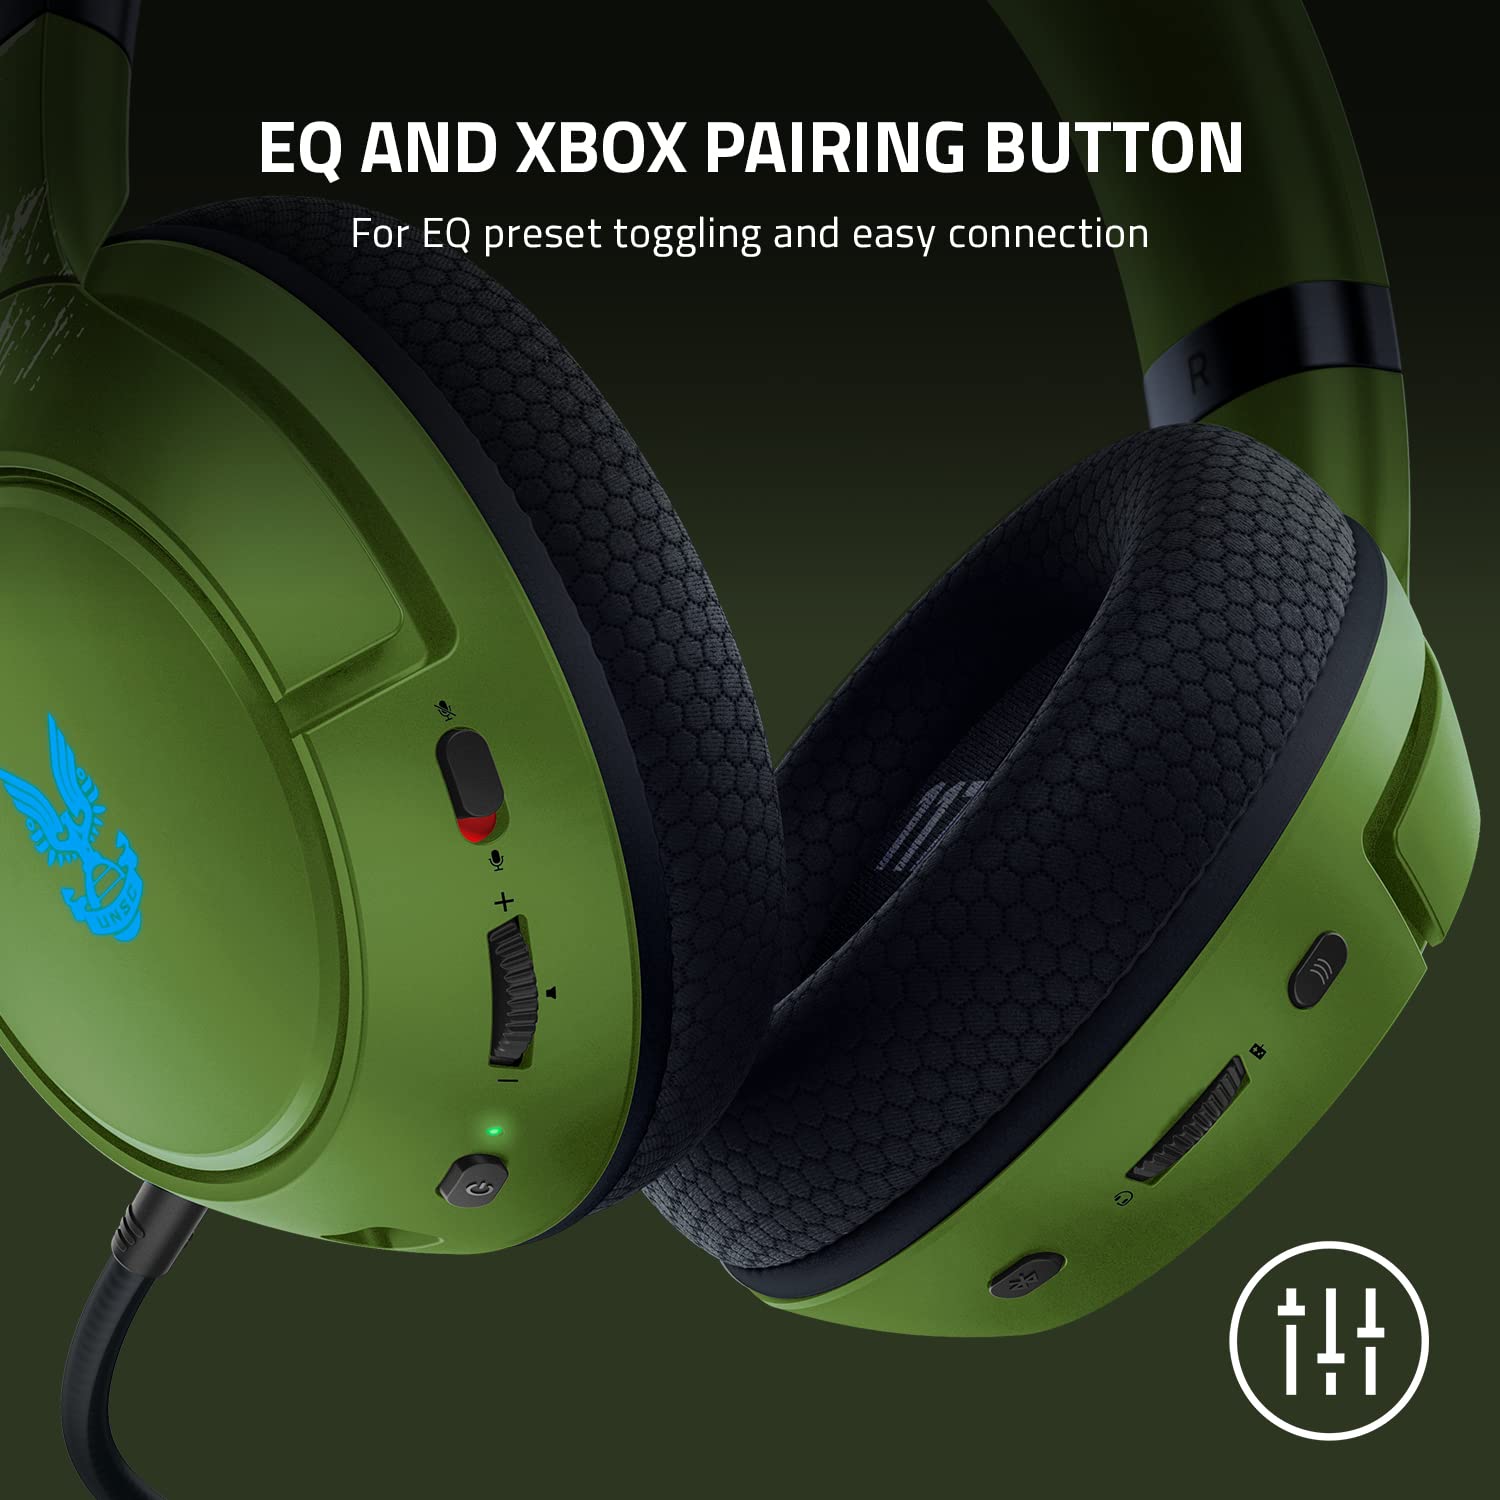 Razer Kaira Pro Wireless Gaming Headset for Xbox Series X | S - Halo Infinite Edition - Refurbished Pristine